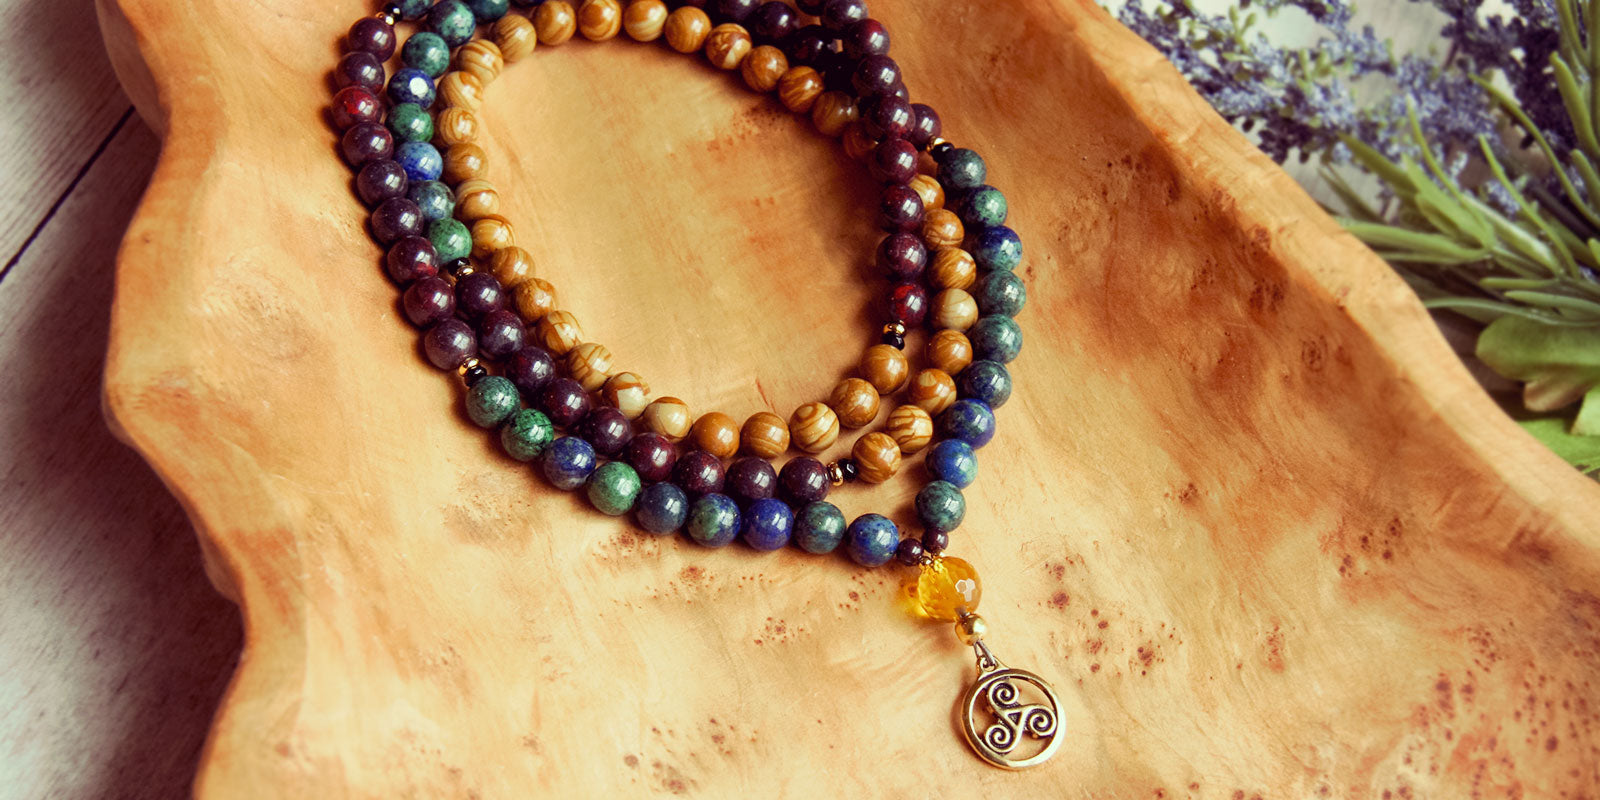 Yoga Meditation Wood Bodhi Seeds Prayer Beads Wrist Mala Stretch Bracelet